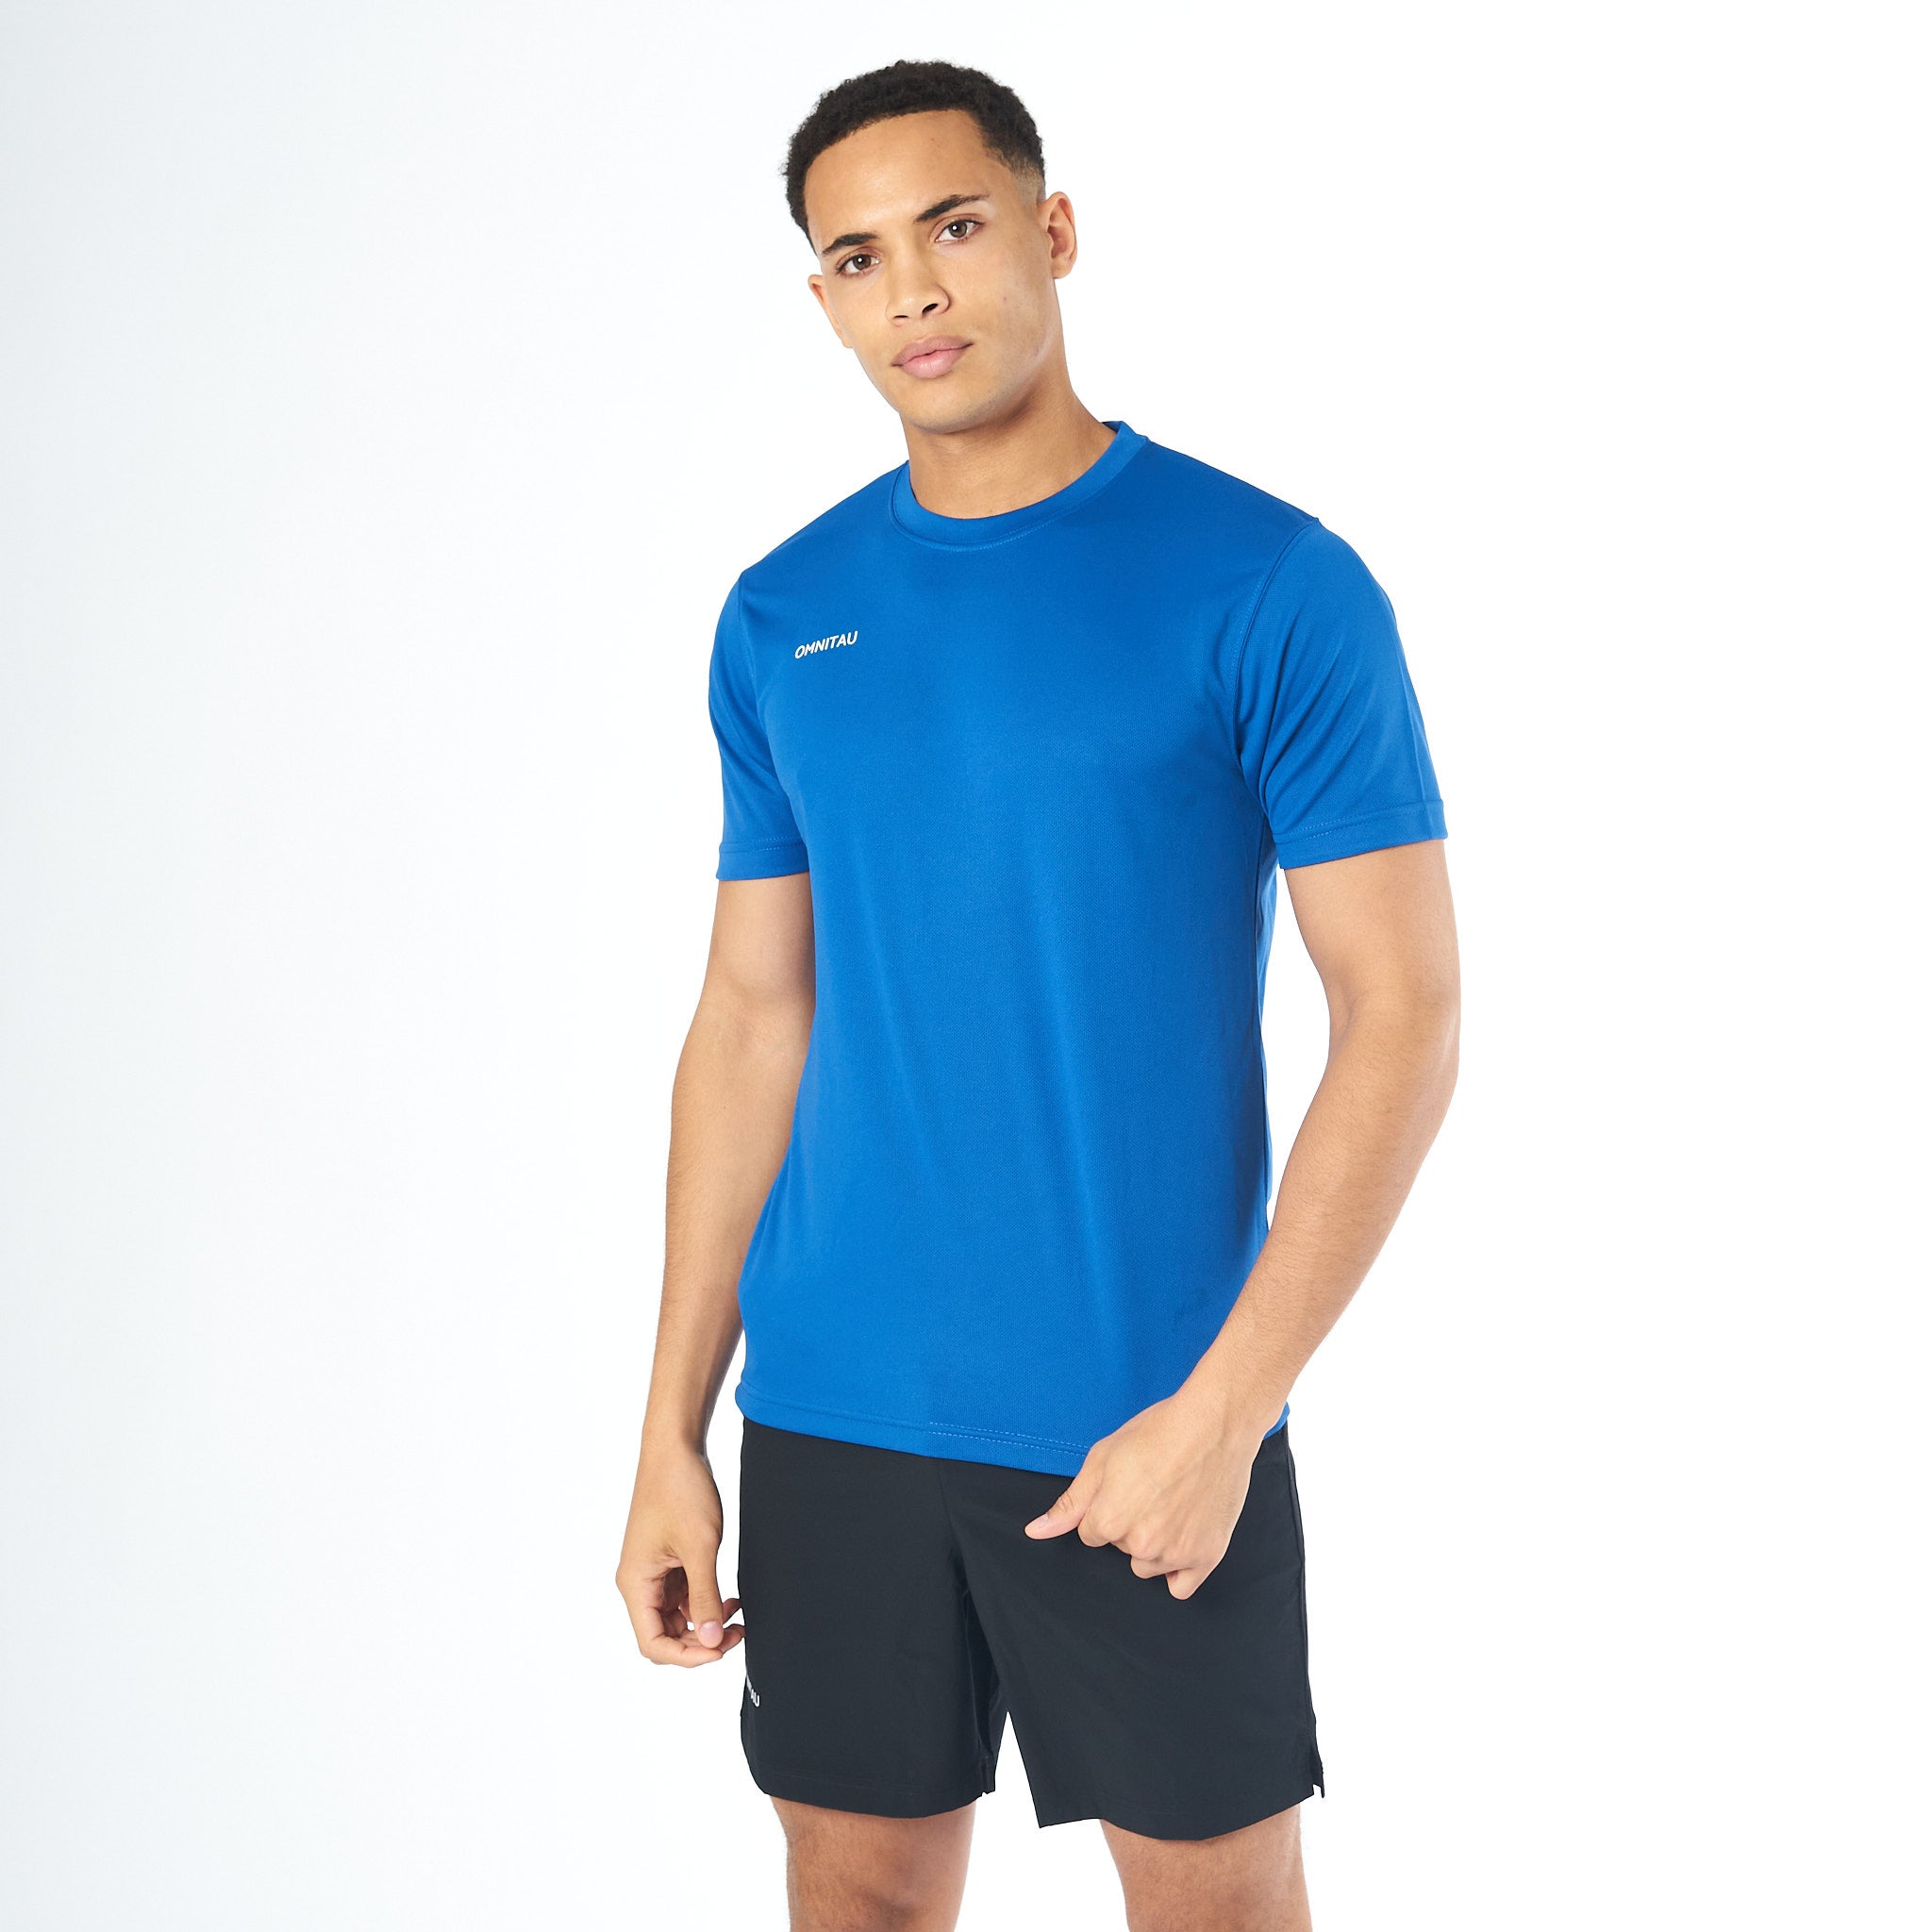 Omnitau Men's Team Sports Breathable Technical T-Shirt - Royal Blue